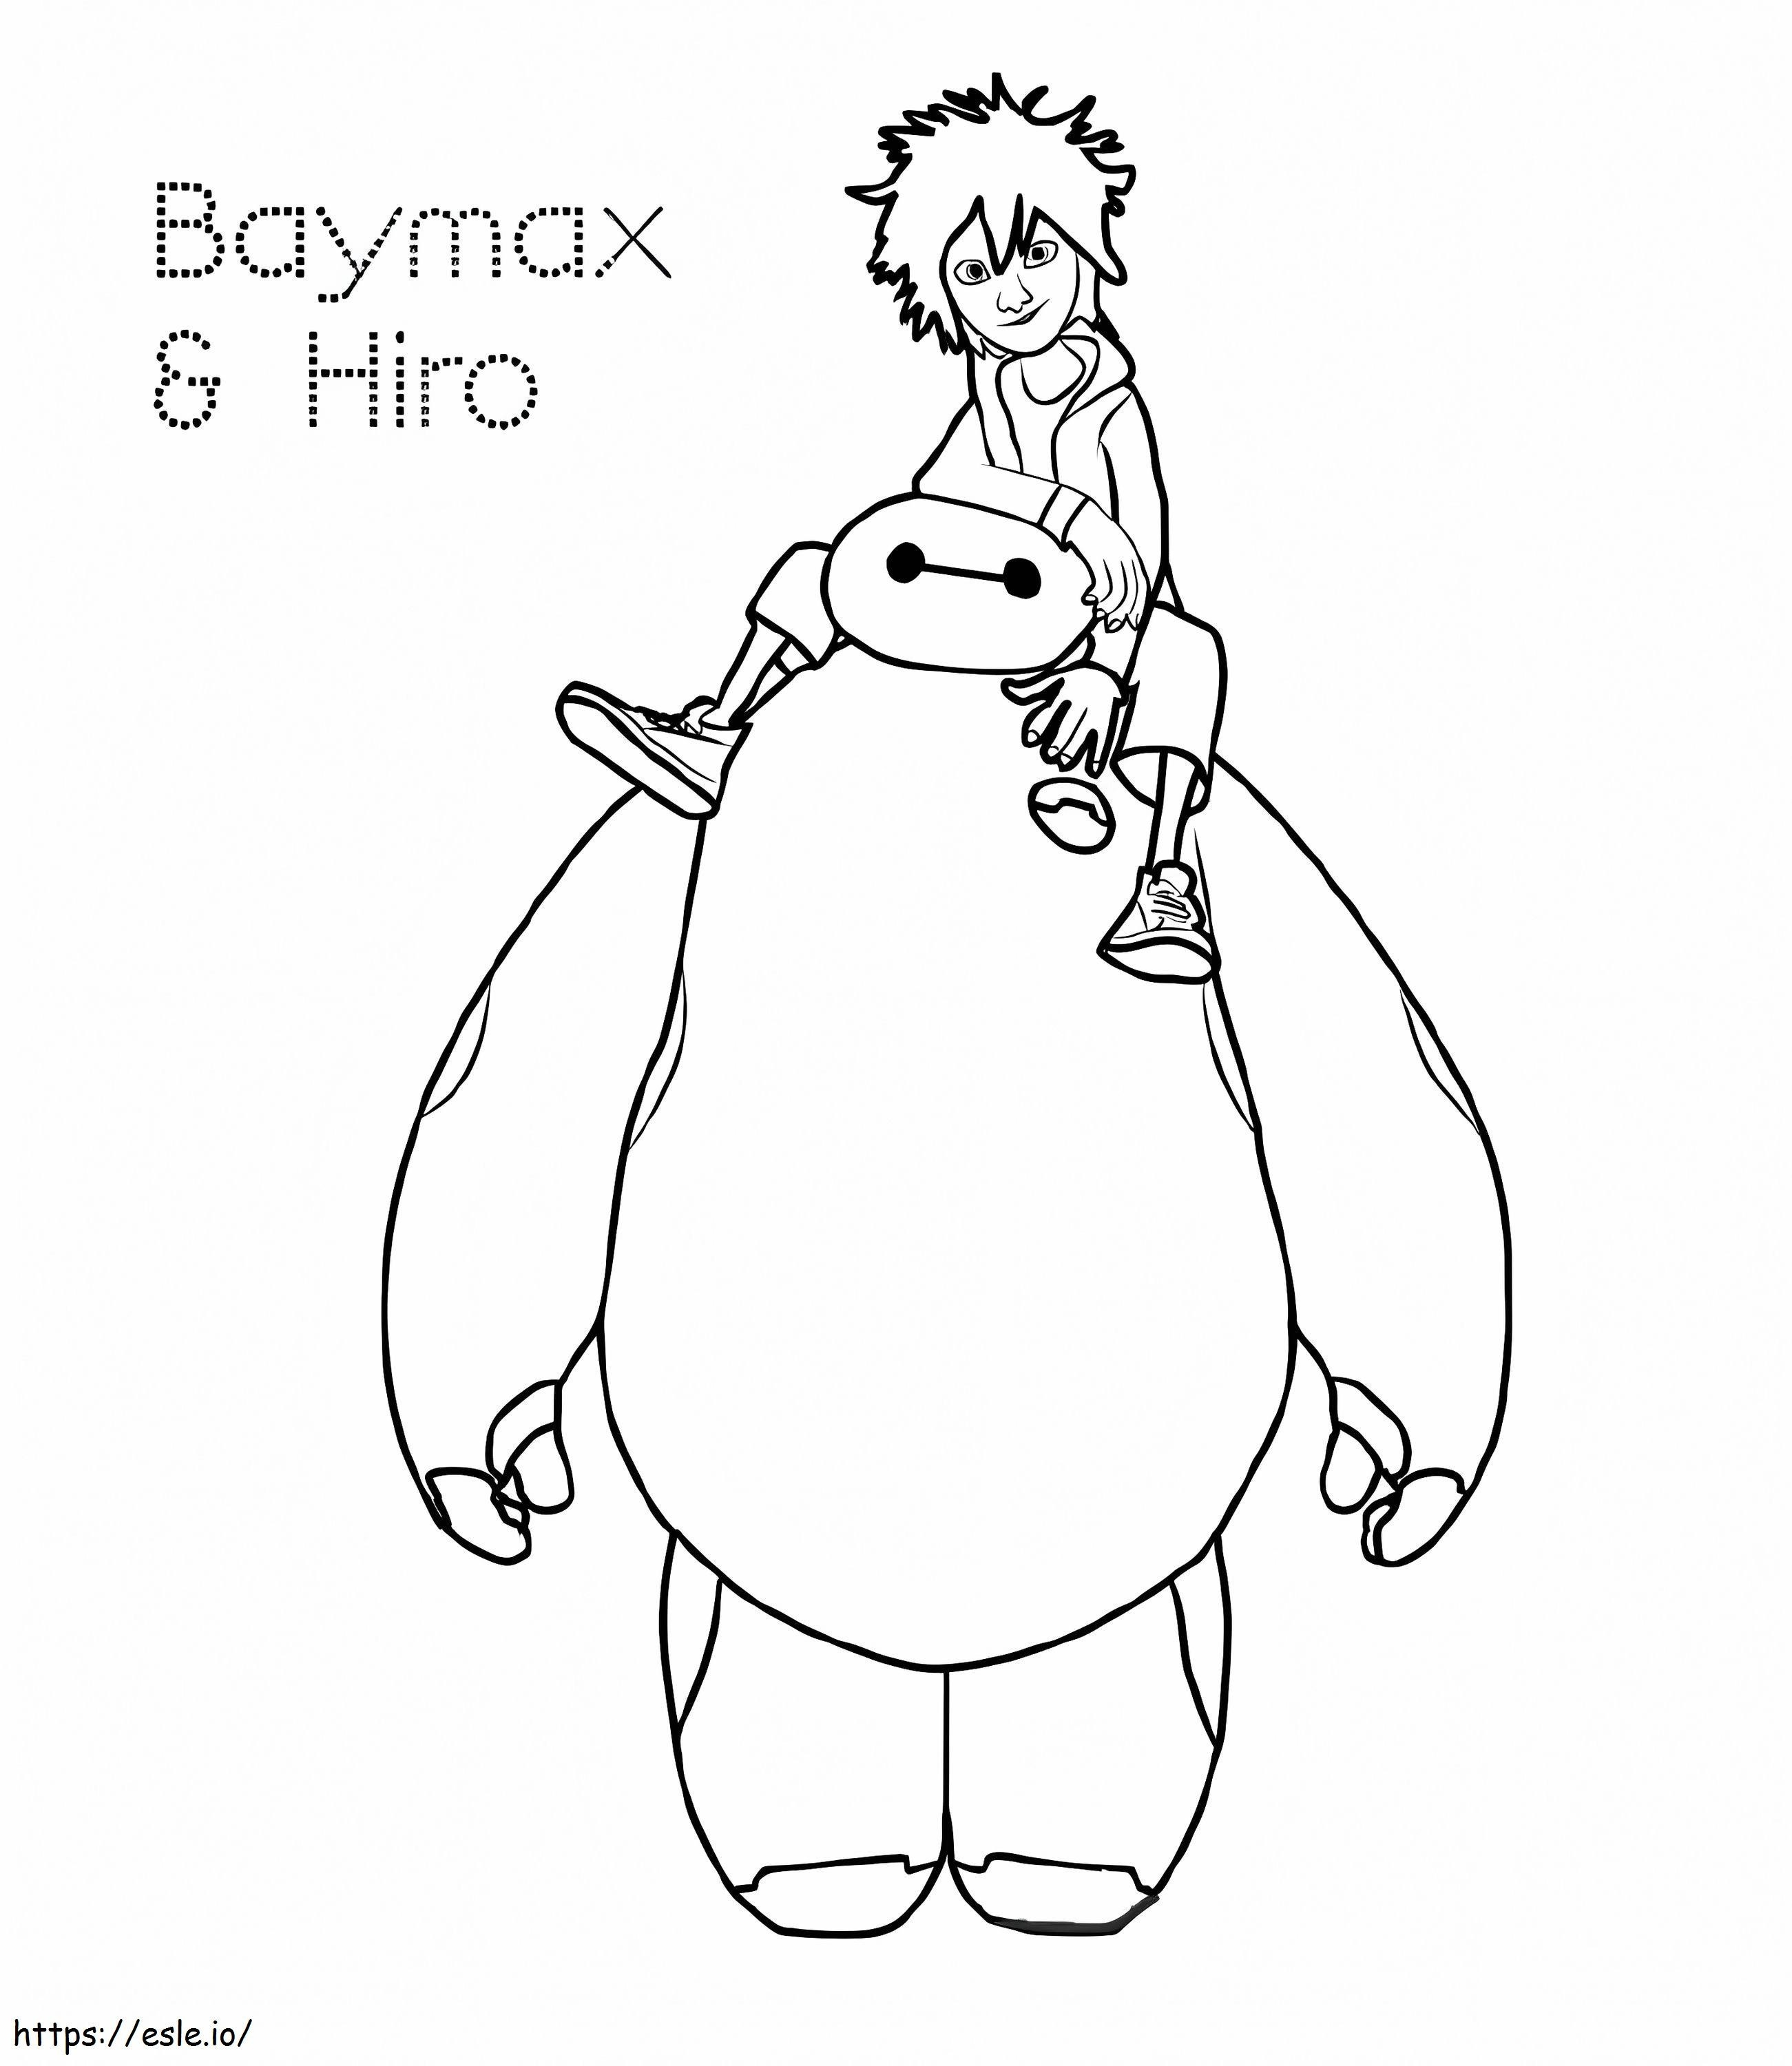 Hiro en Baymax kleurplaat kleurplaat